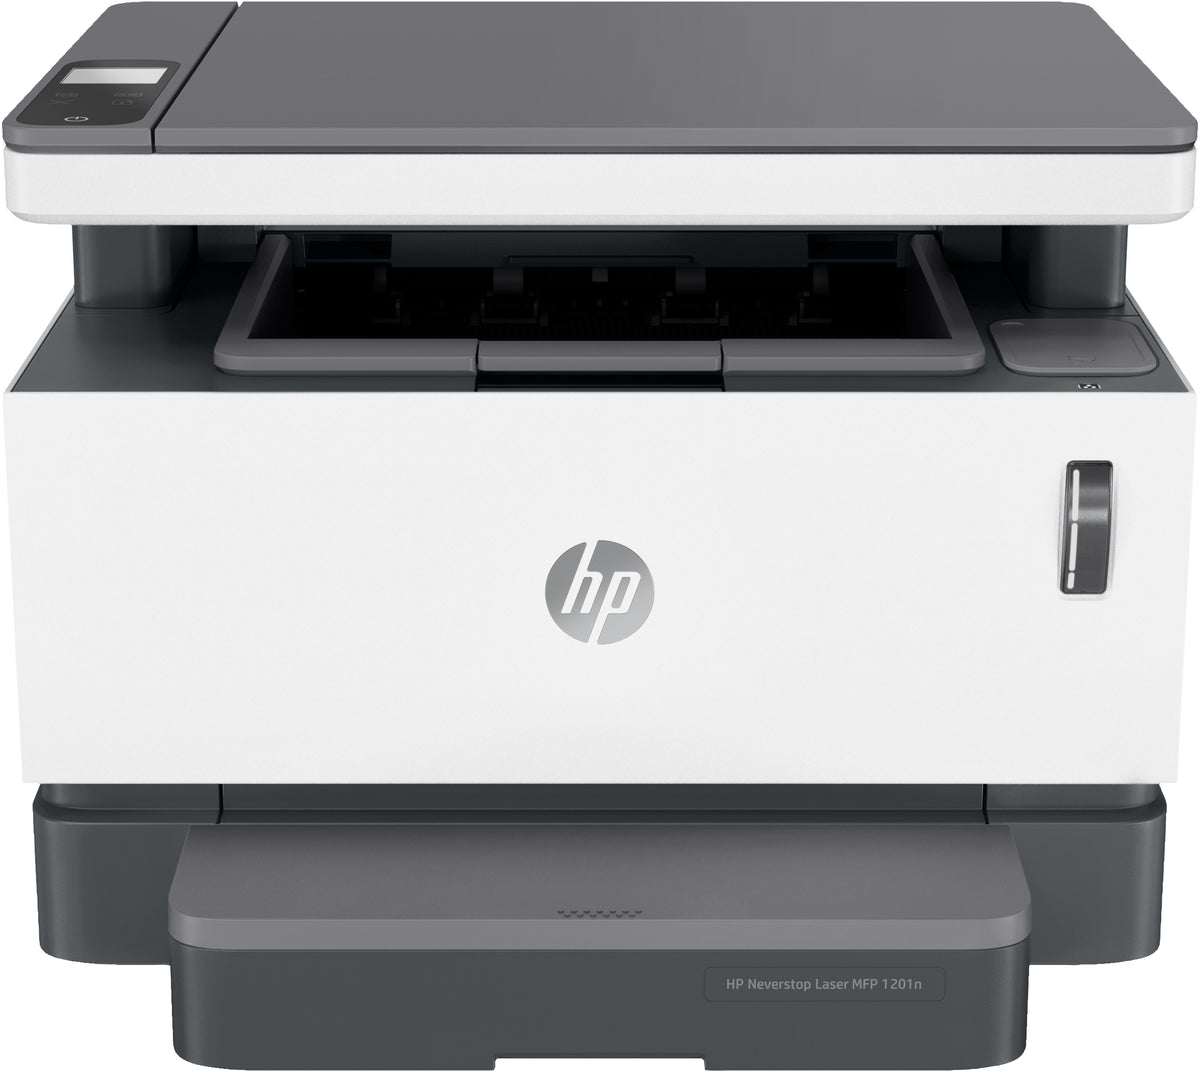 HP Neverstop Laser MFP 1201n - Impressora multi-funções - P/B - laser - 216 x 356 mm (original) - Legal (media) - até 14 ppm (cópia) - até 20 ppm (impressão) - 150 folhas - USB 2.0, LAN